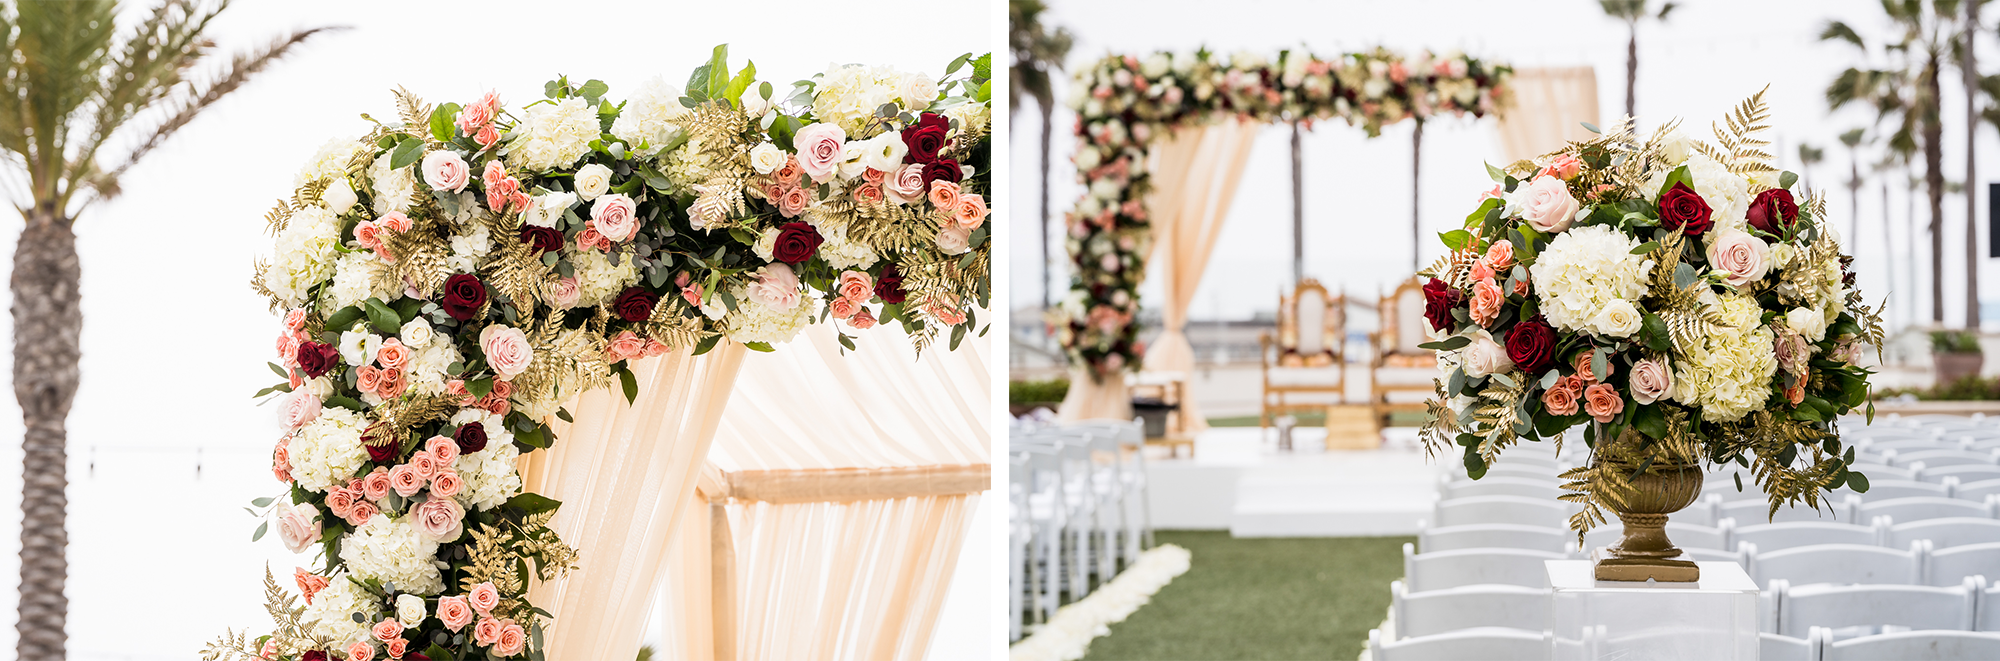 18-SR-Wedding-Hilton-Waterfront-Huntington-Beach-South-Asian-Indian-Wedding-Photos-Andrew-Kwak-Photography.png